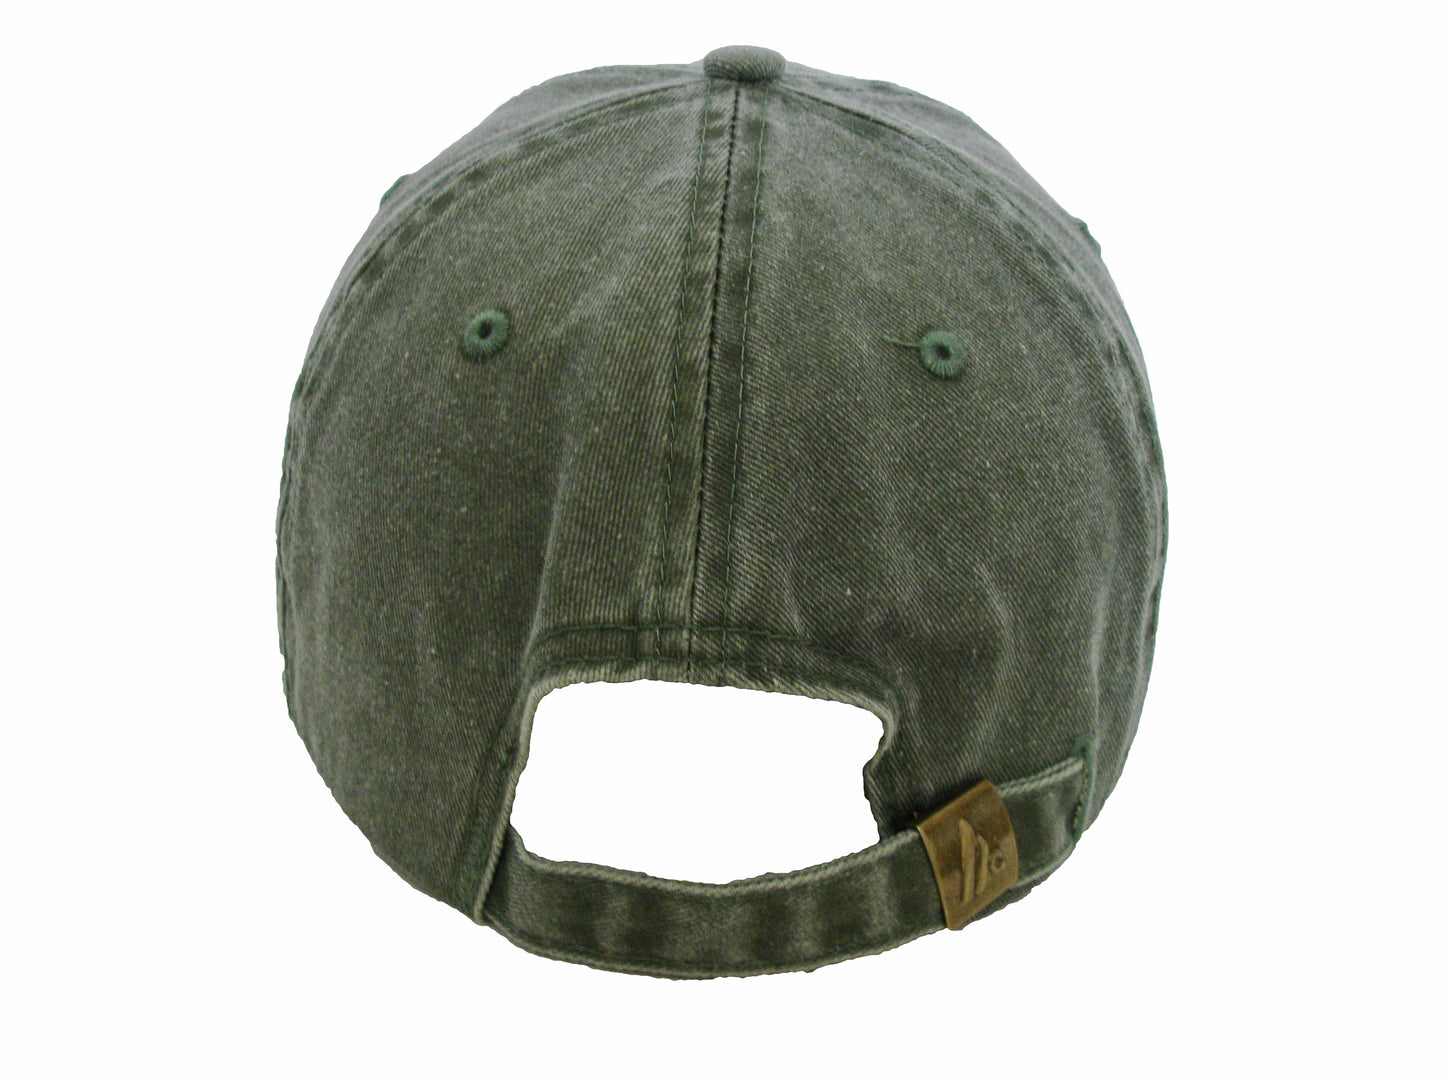 Snaffle Bit Baseball Cap Pigment Dyed Hat, Equestrian Hat - Available 15 Colors #C001D